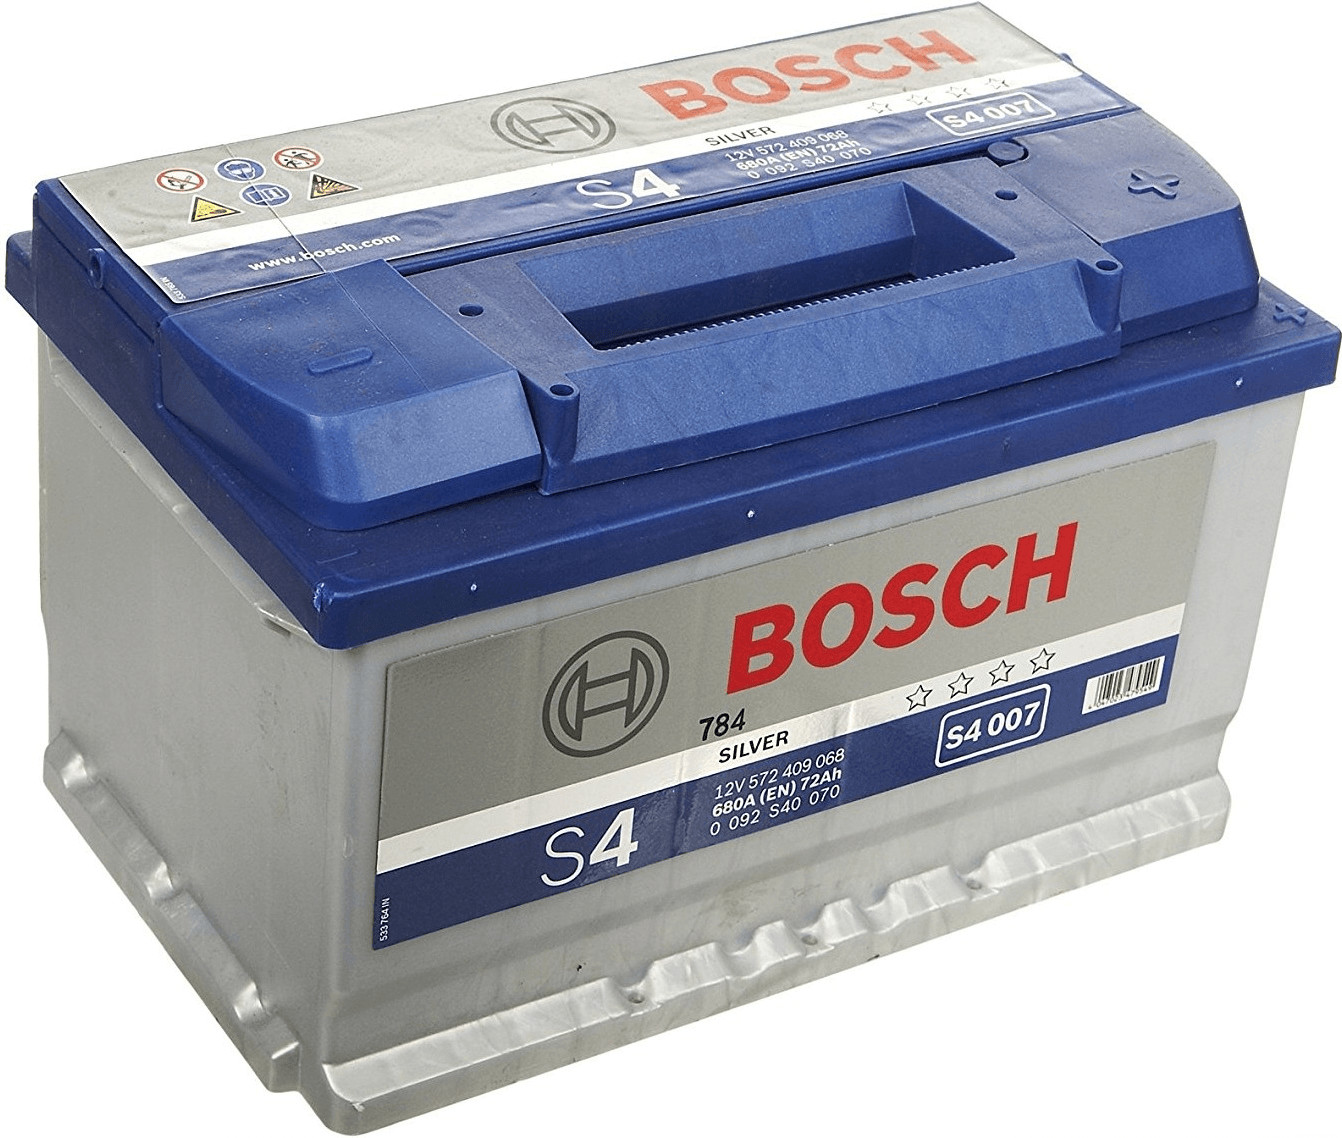 BOSCH Starterbatterie S4 007 72Ah 680A 12V 0092S40070 günstig online kaufen